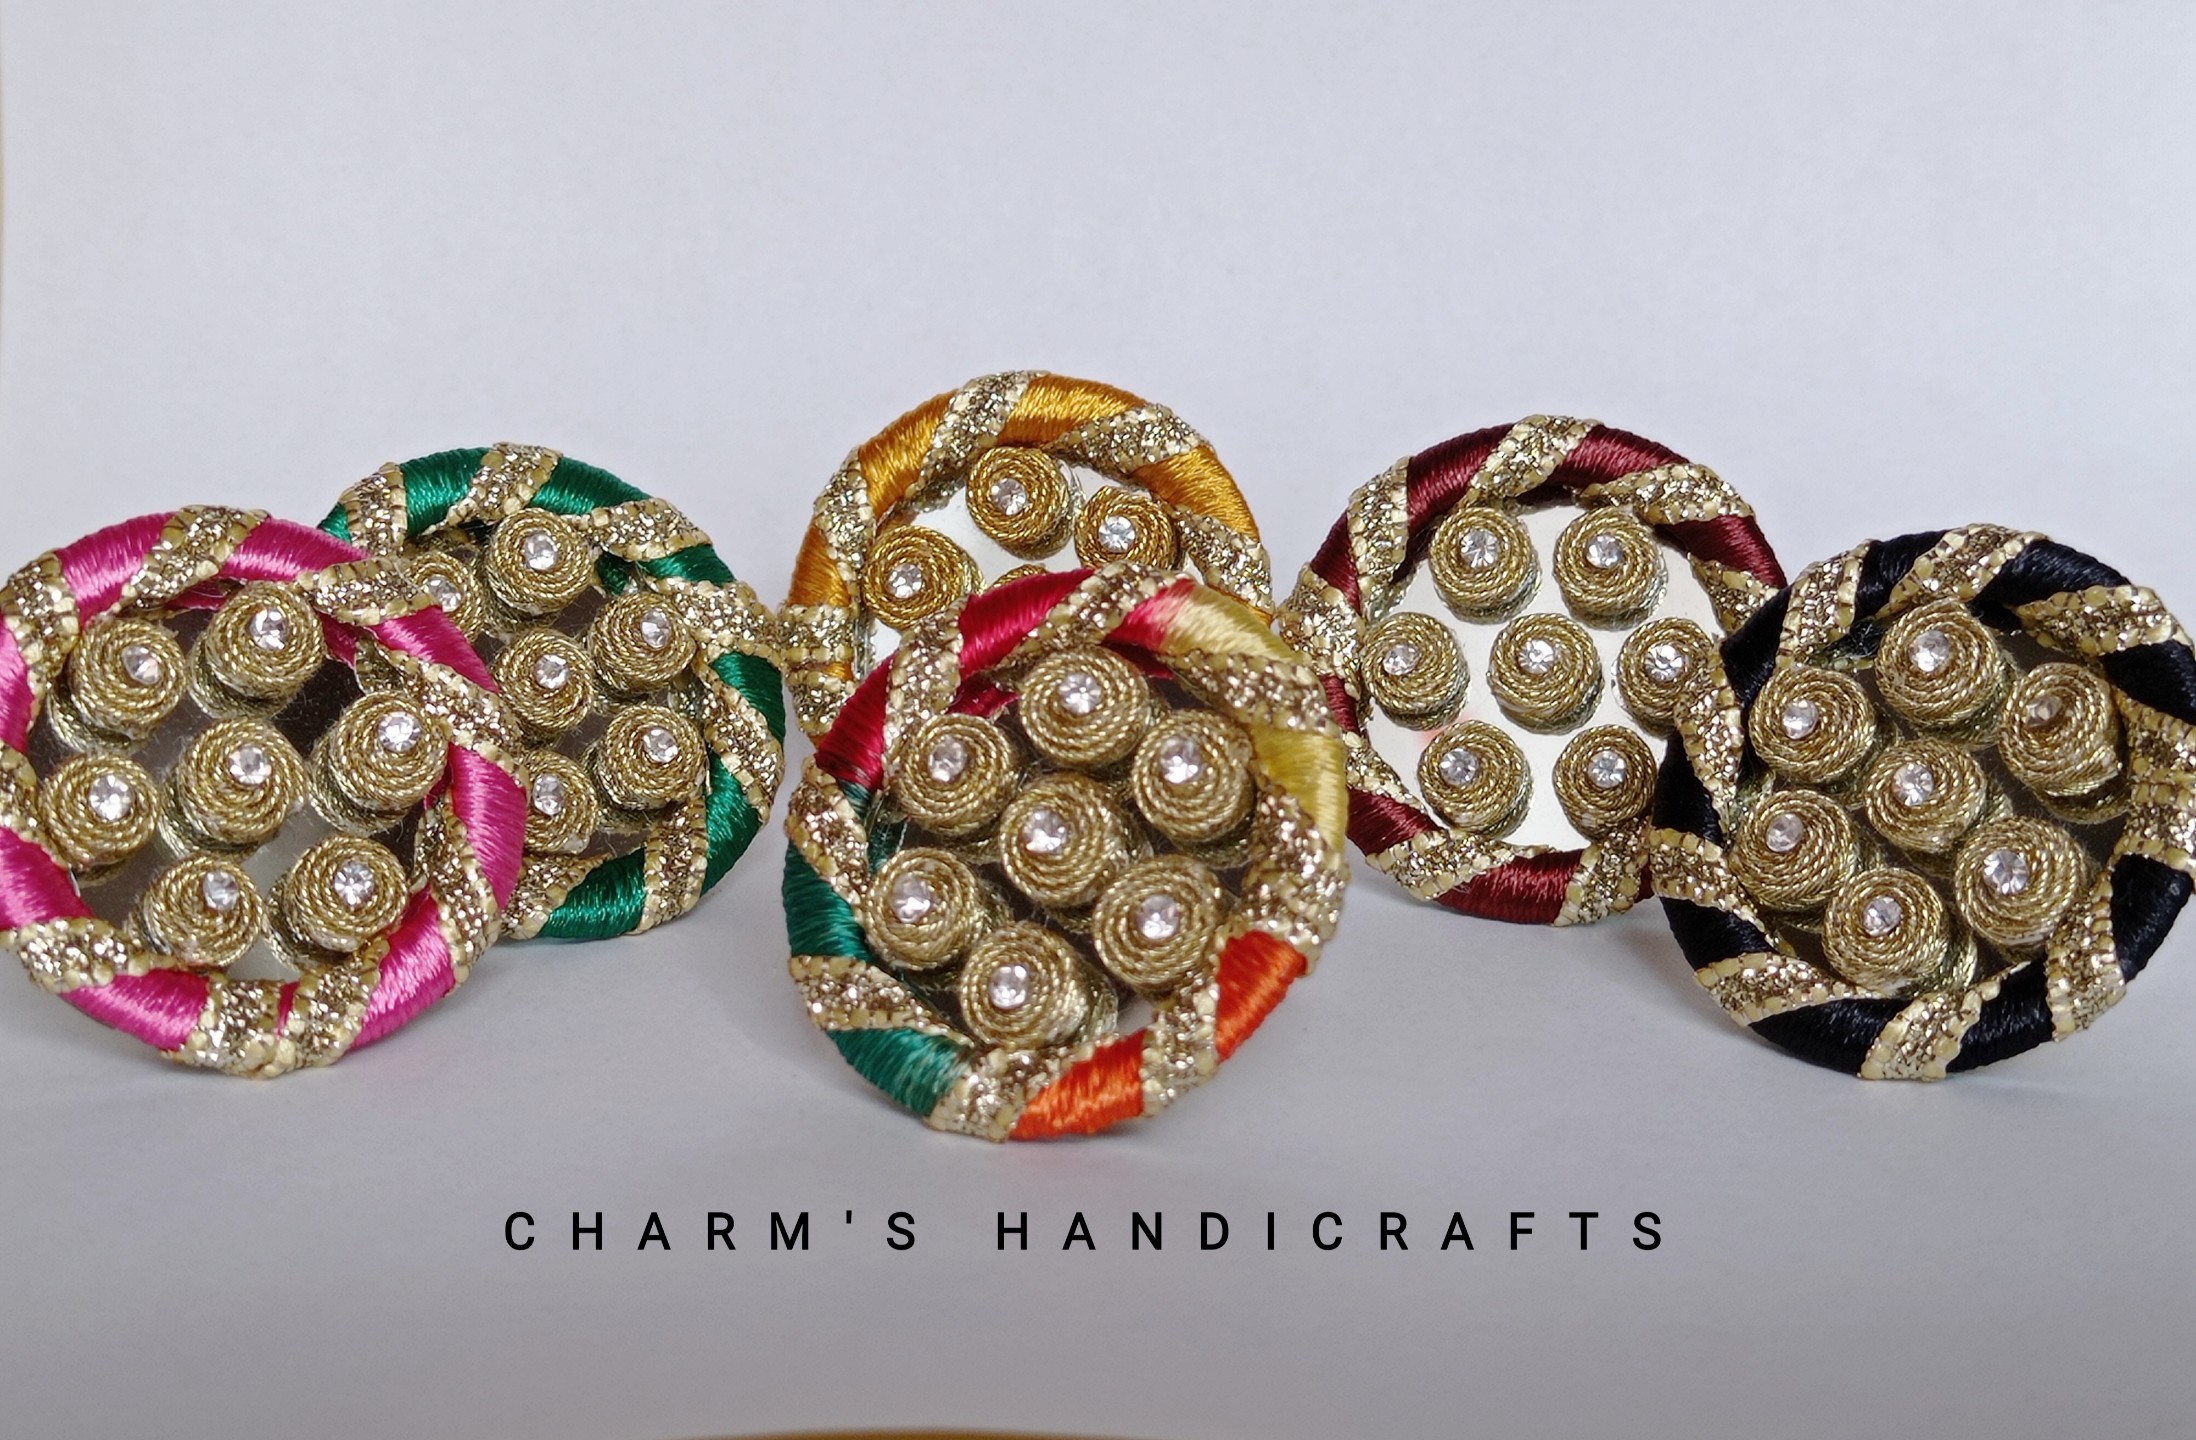 Charm's Handicrafts